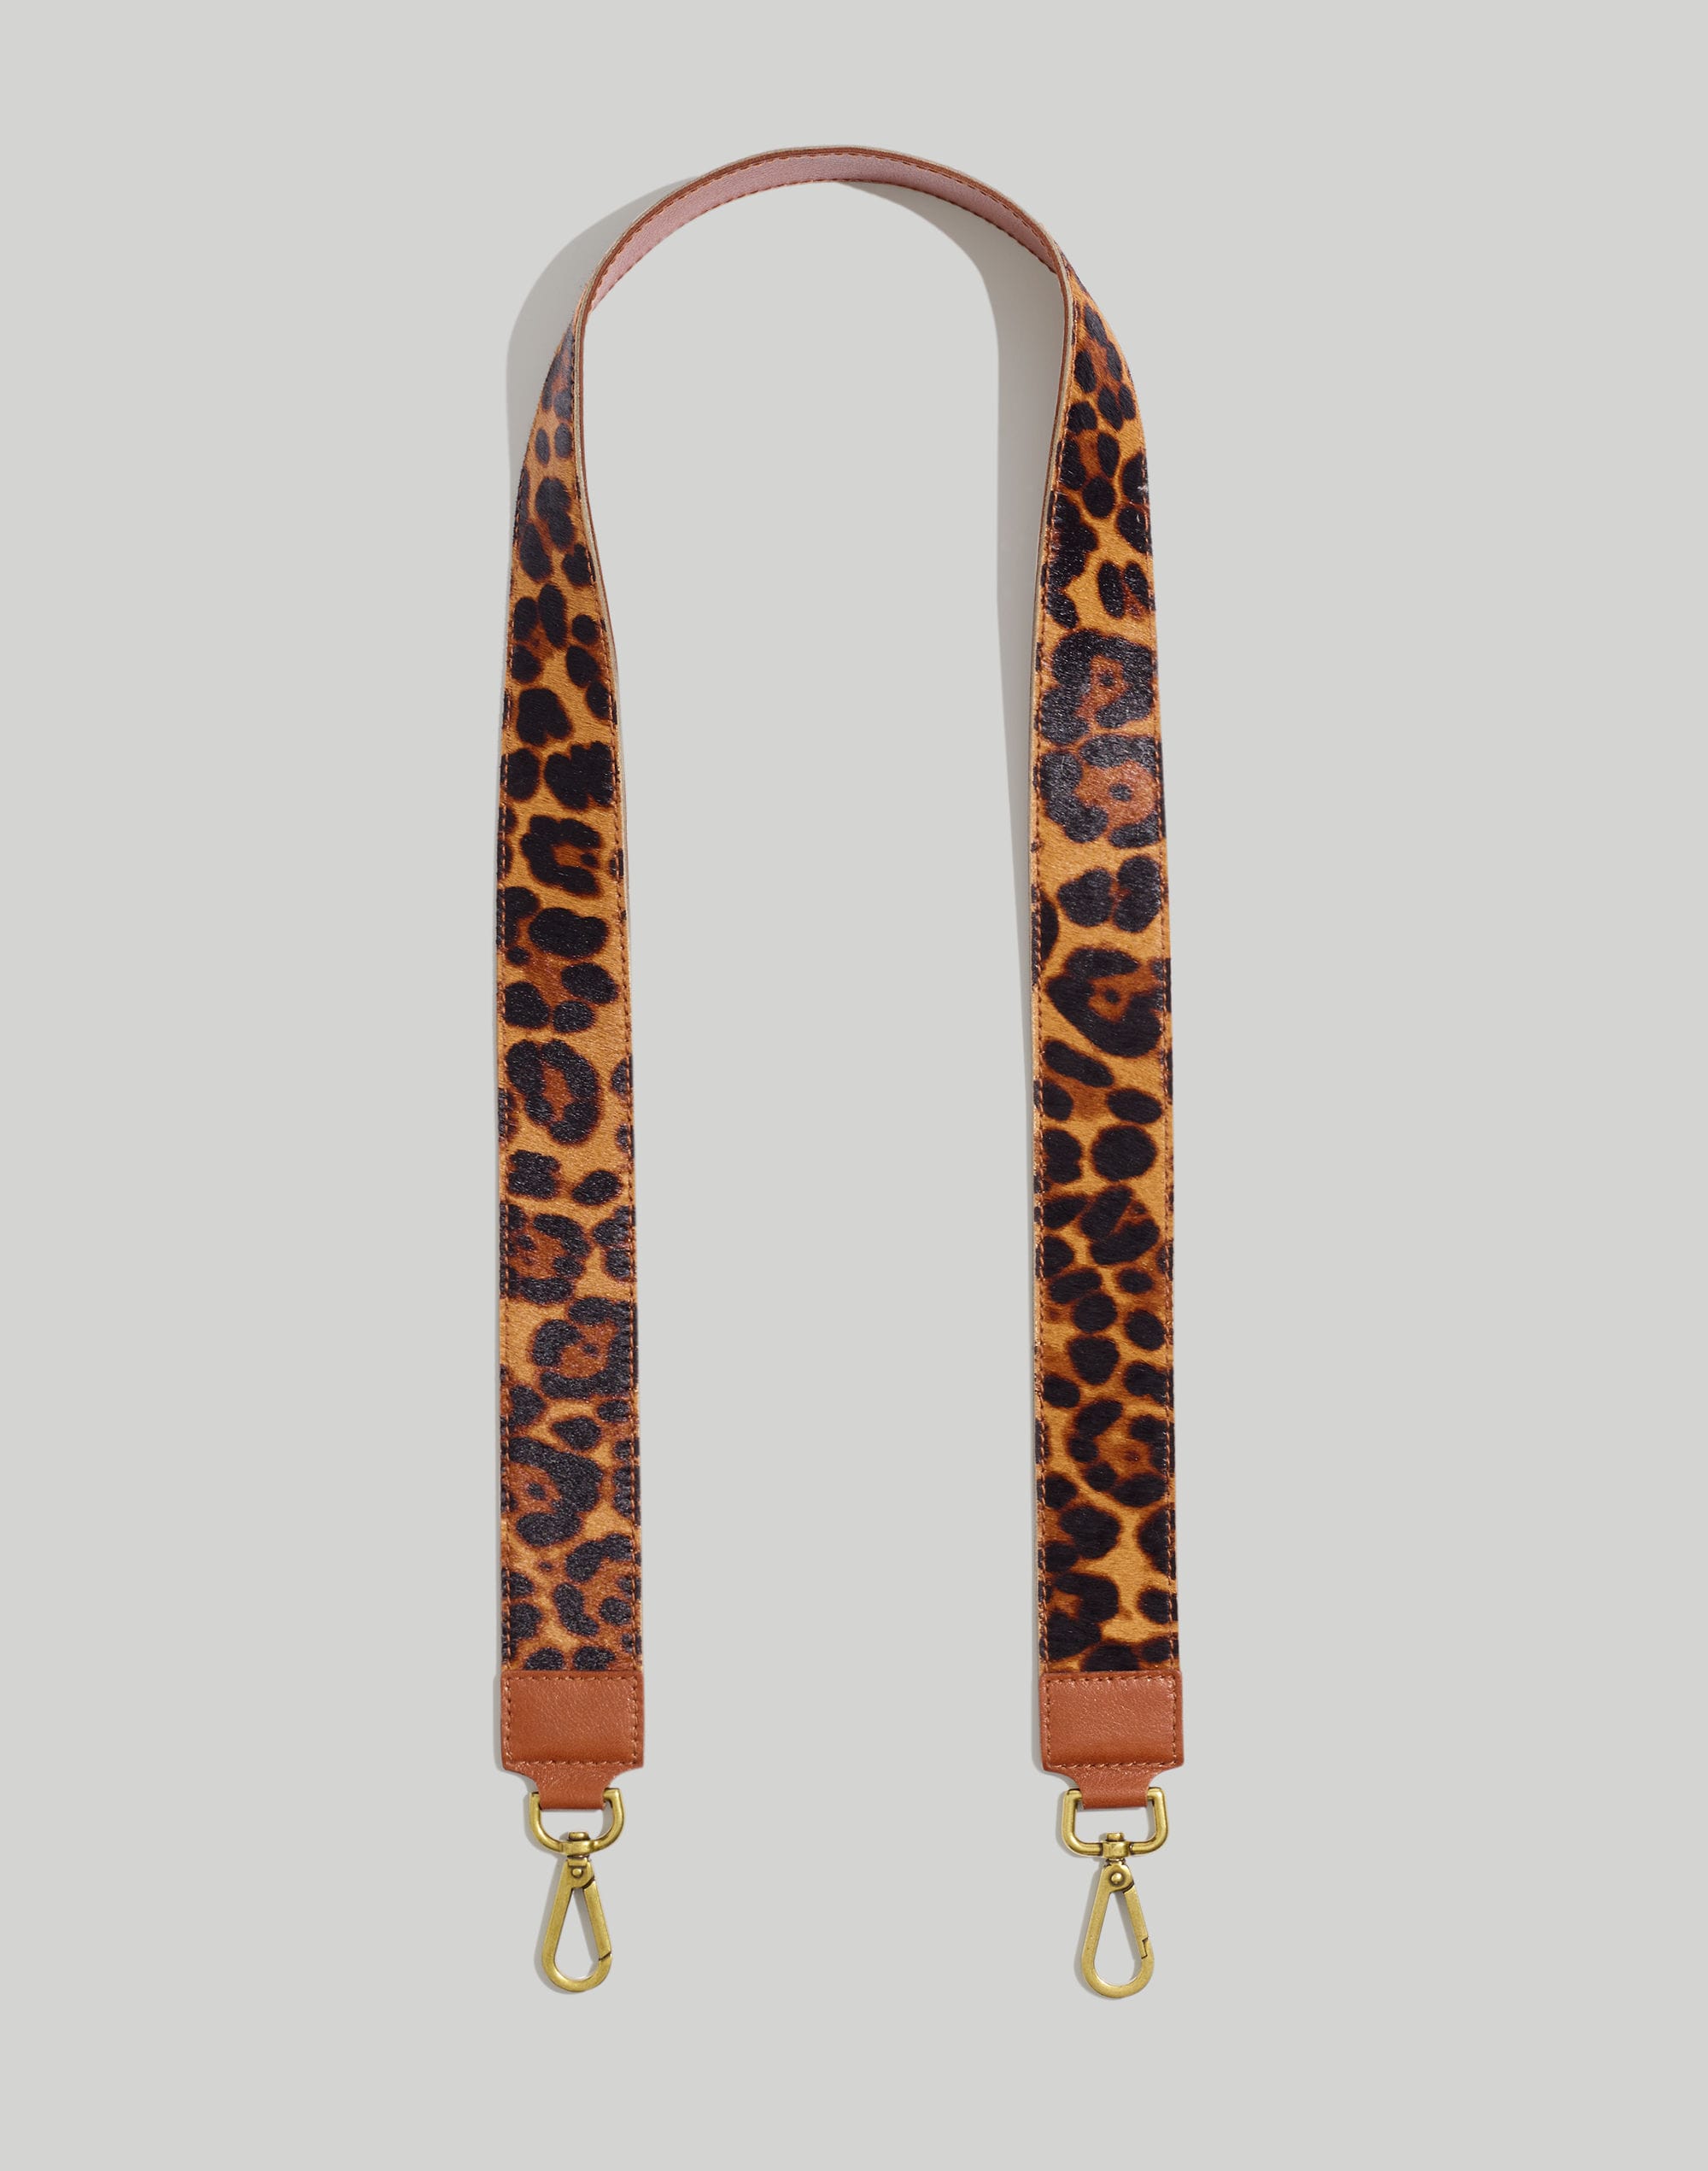 The Crossbody Bag Strap: Leopard Calf Hair Edition